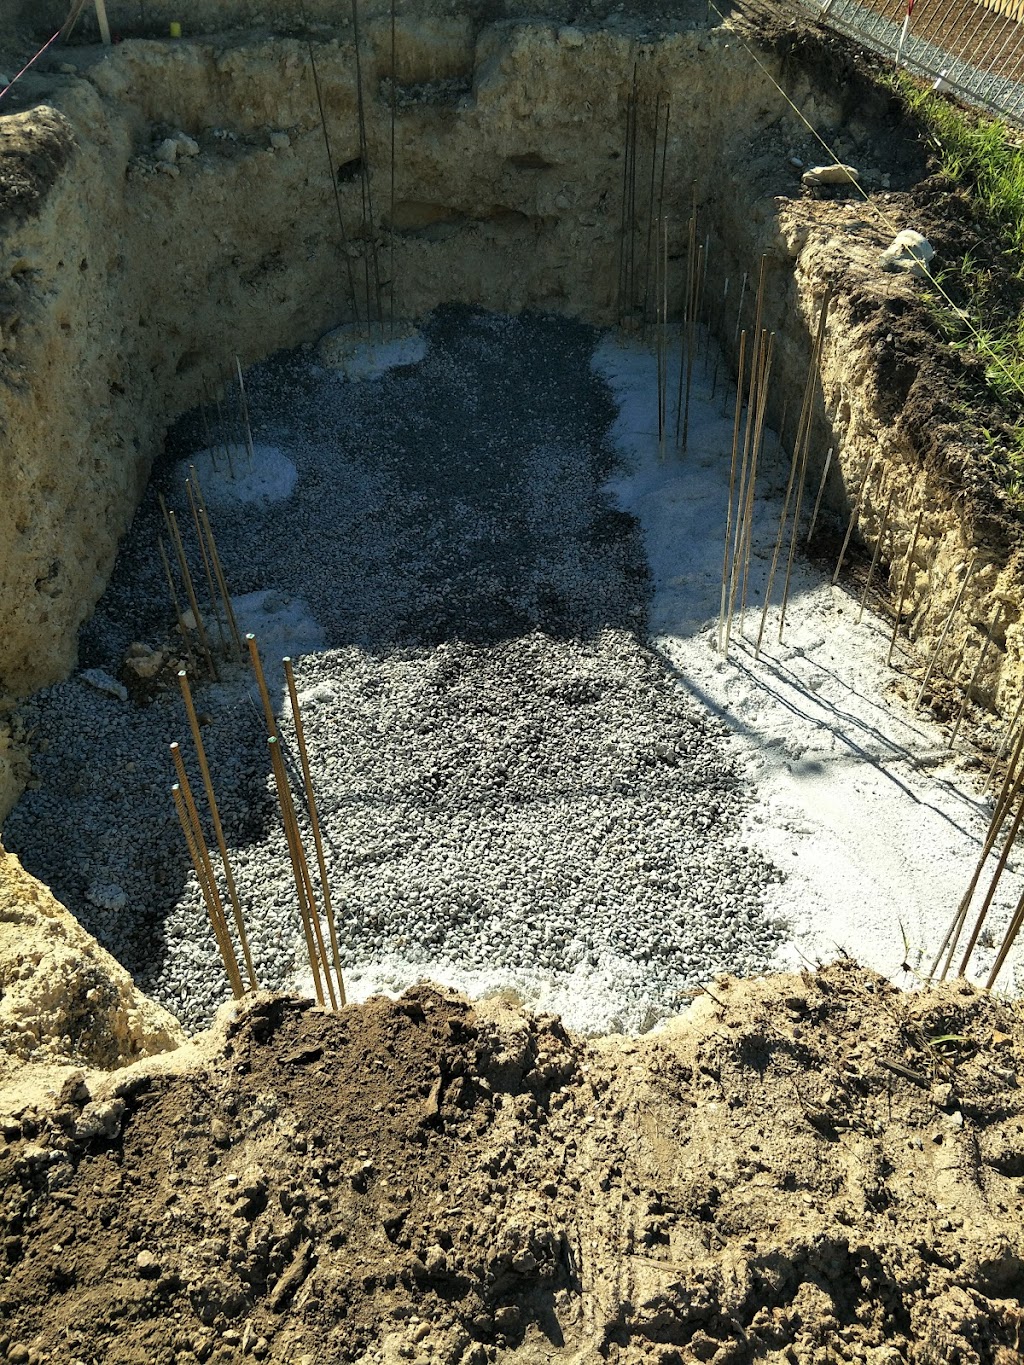 Alltrades Excavator Hire | general contractor | 22 Blue Rock Dr, Yatala QLD 4207, Australia | 0434615495 OR +61 434 615 495